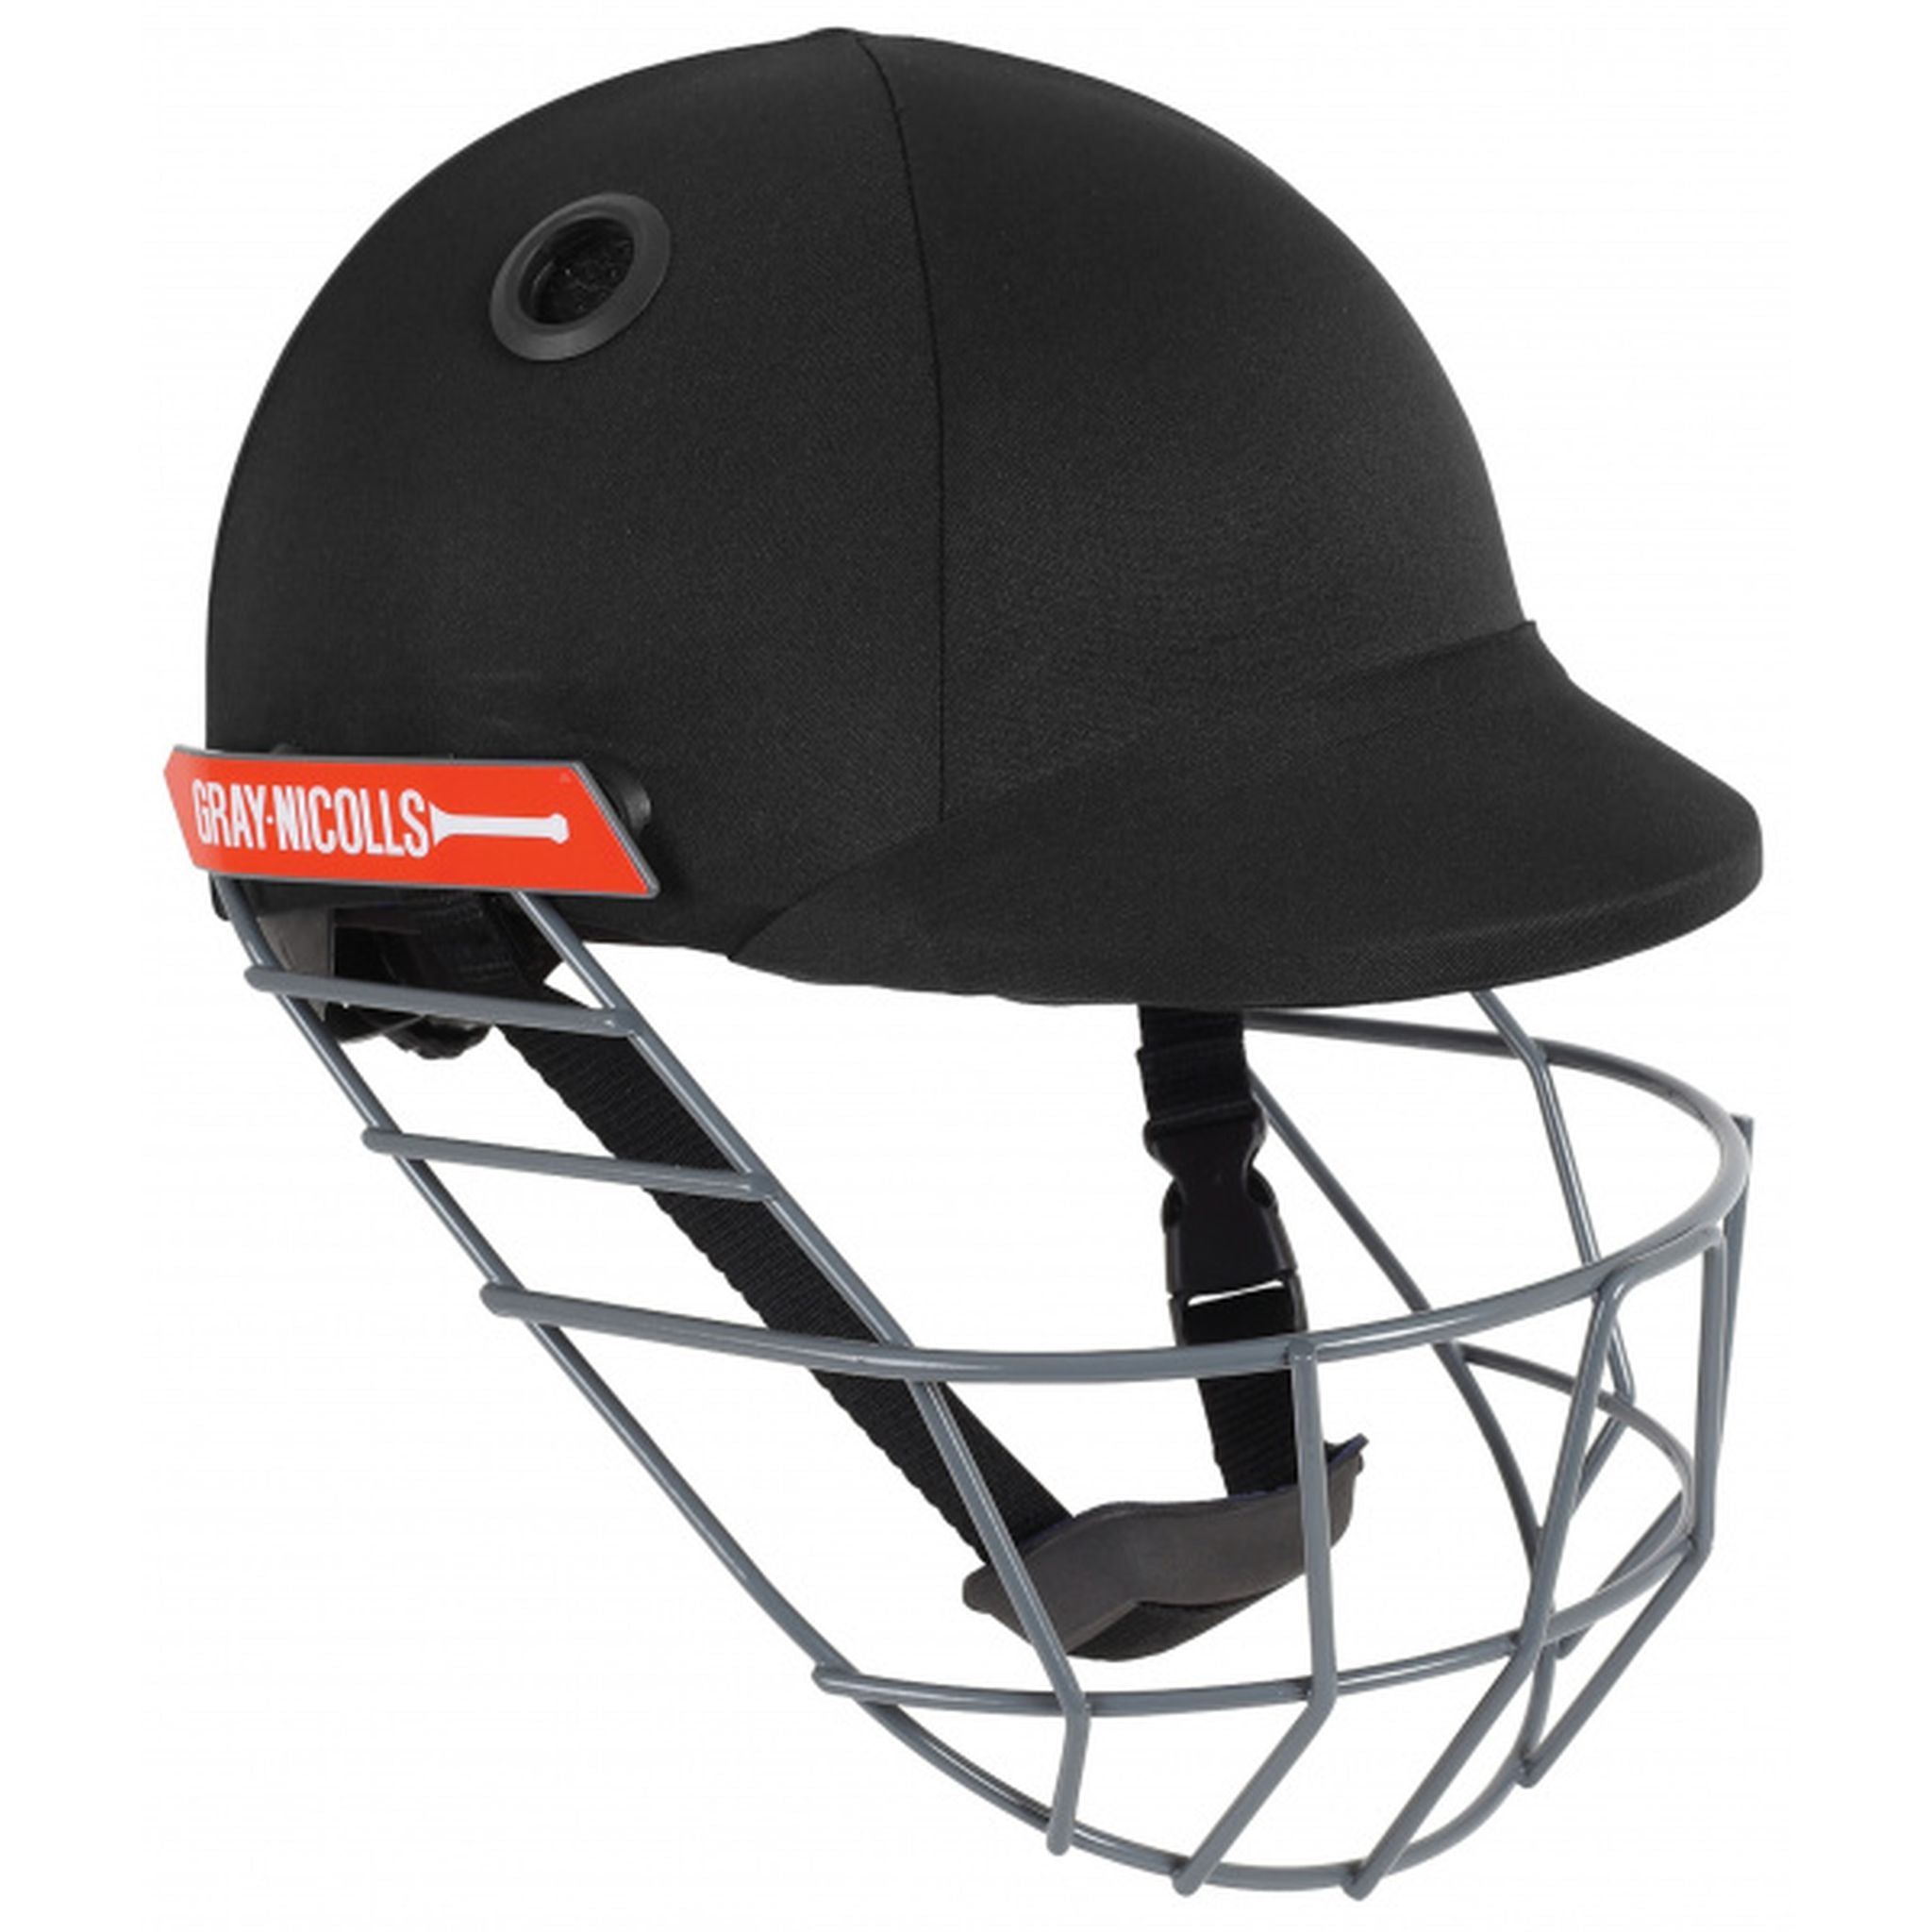 Gray-Nicolls Atomic Cricket Helmet